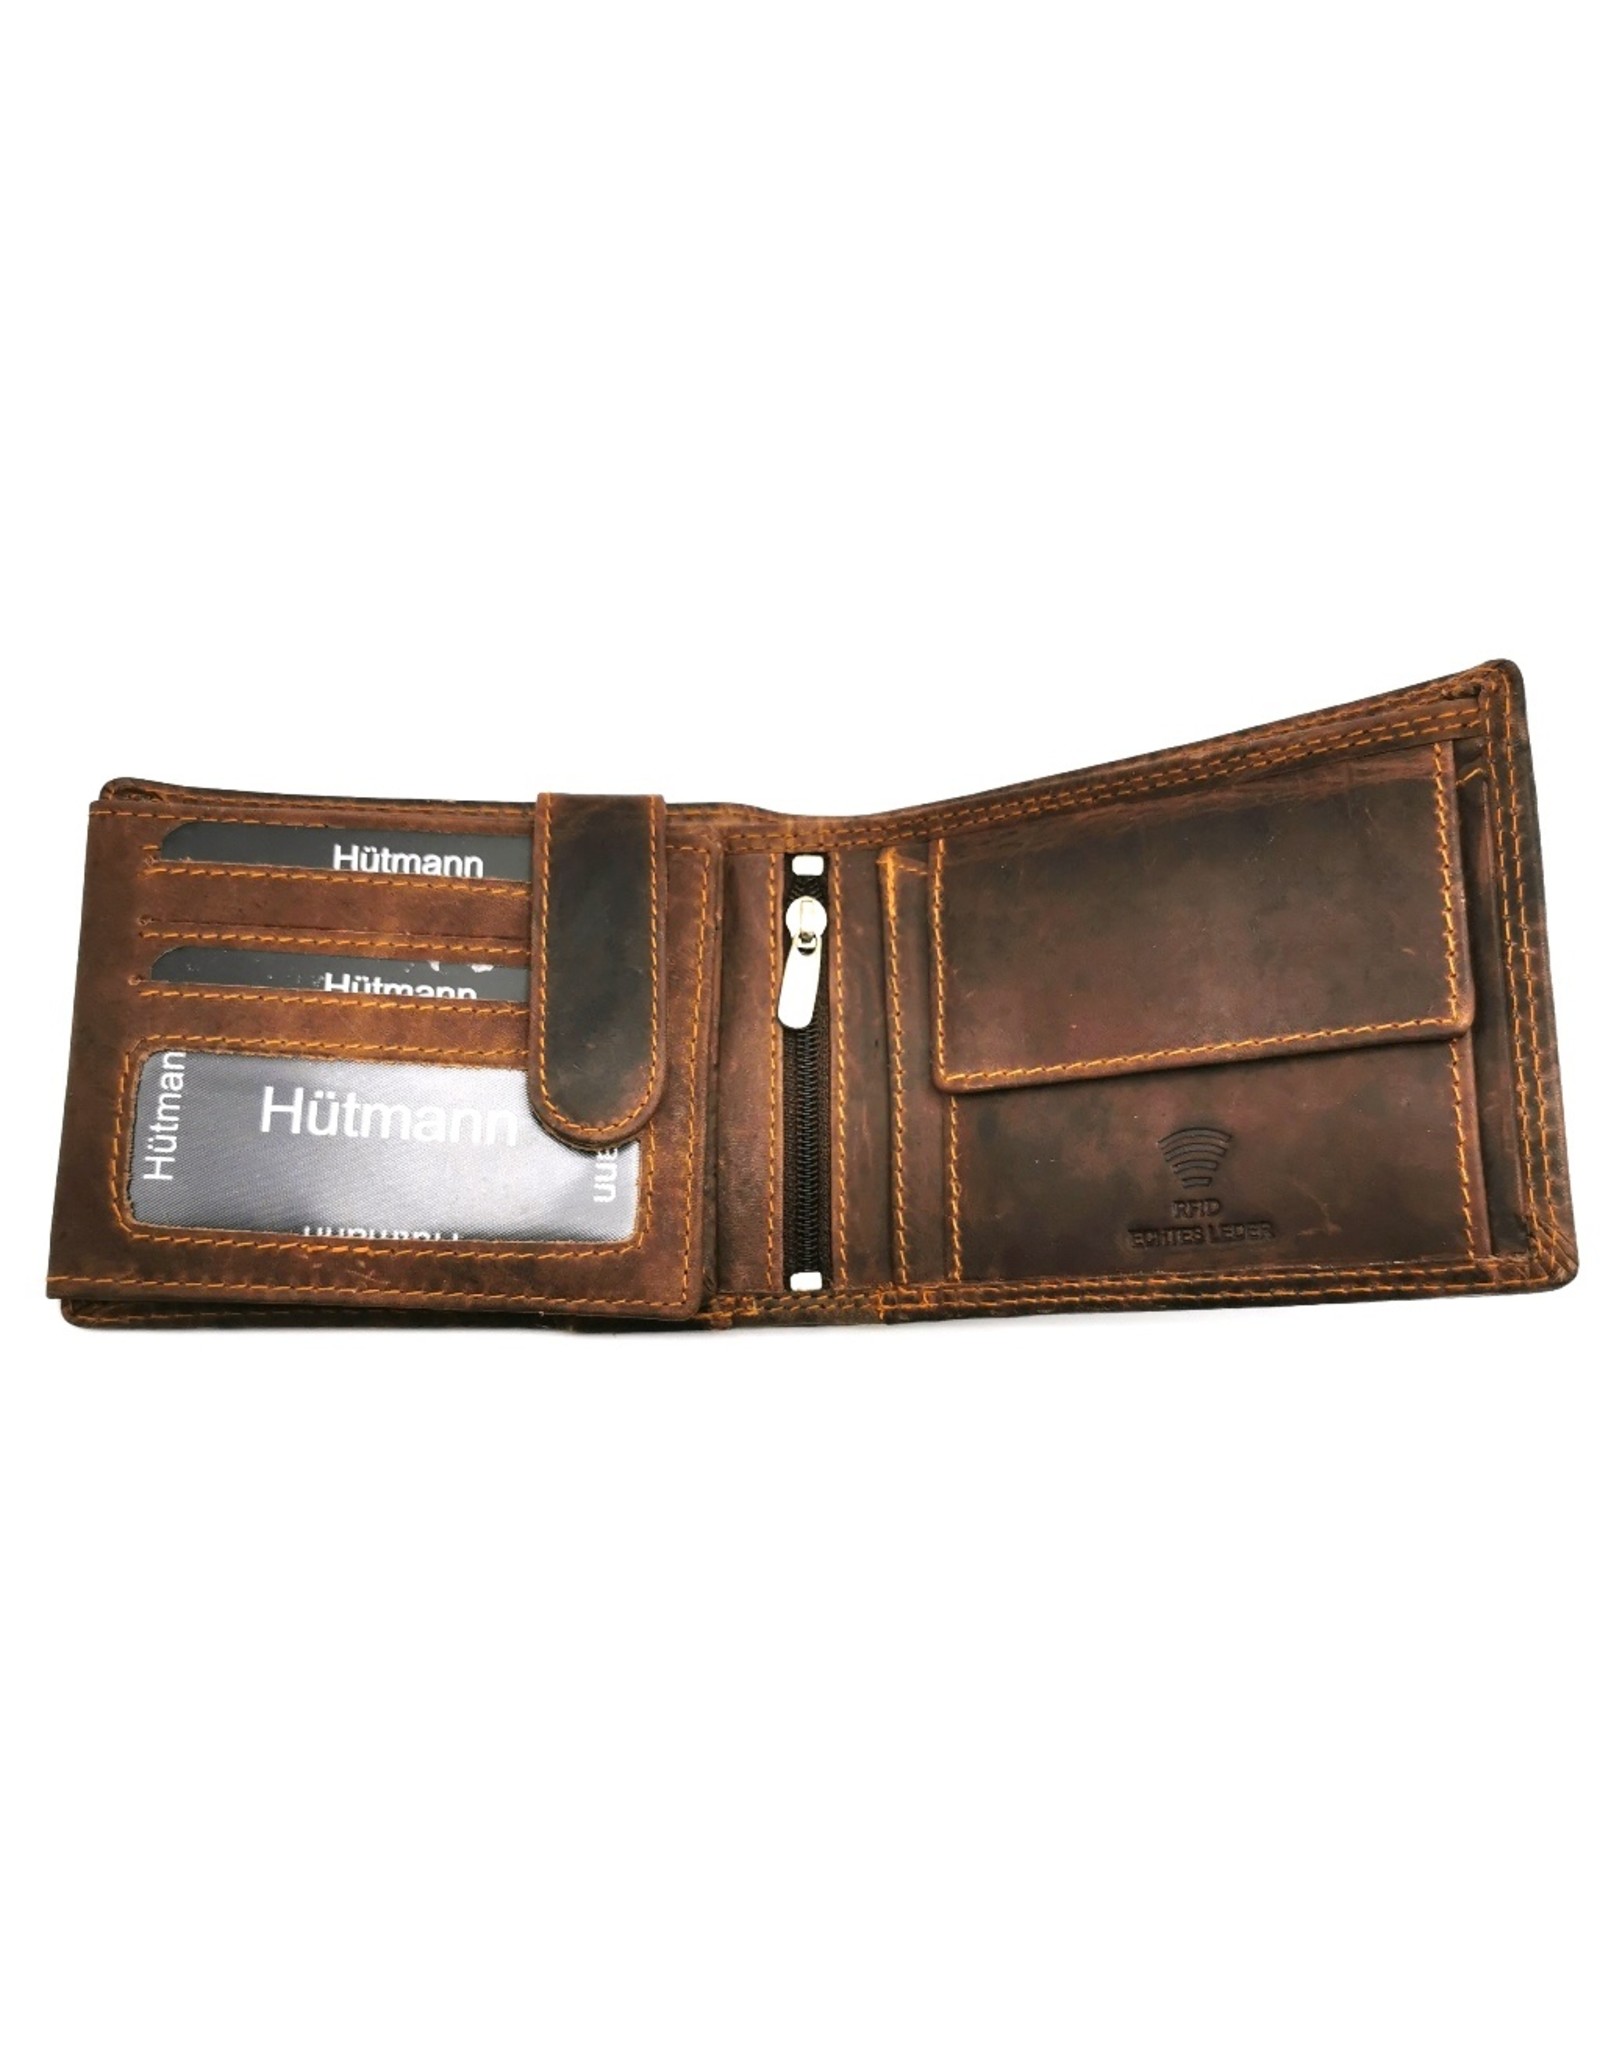 HillBurry Leather Wallets -  Hütmann Leather wallet with embossed motorbike  vintage